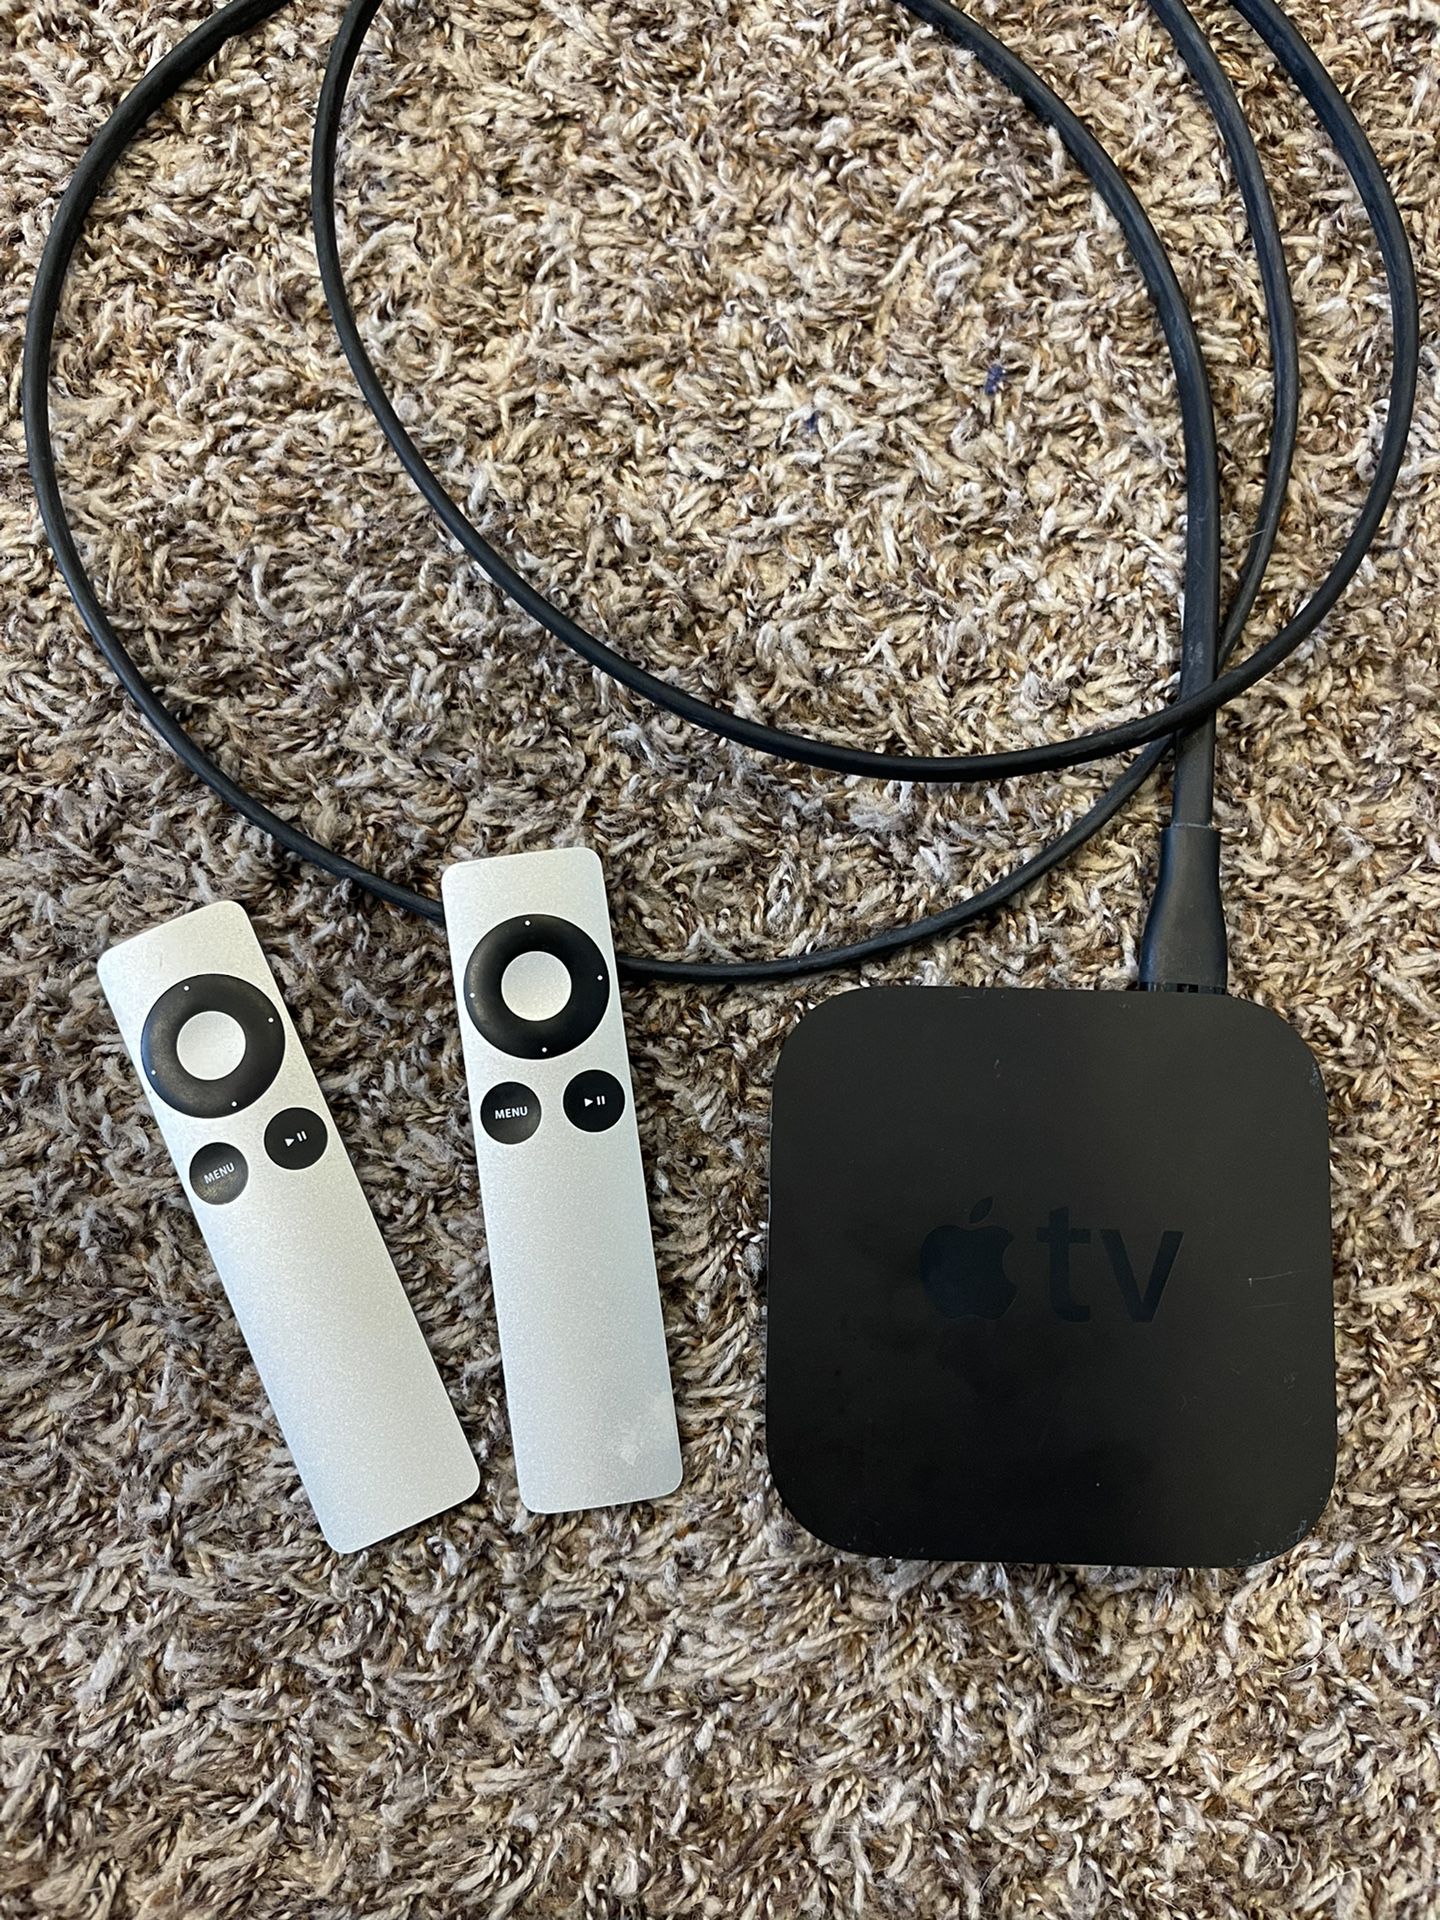 Apple TV + 2 Remotes